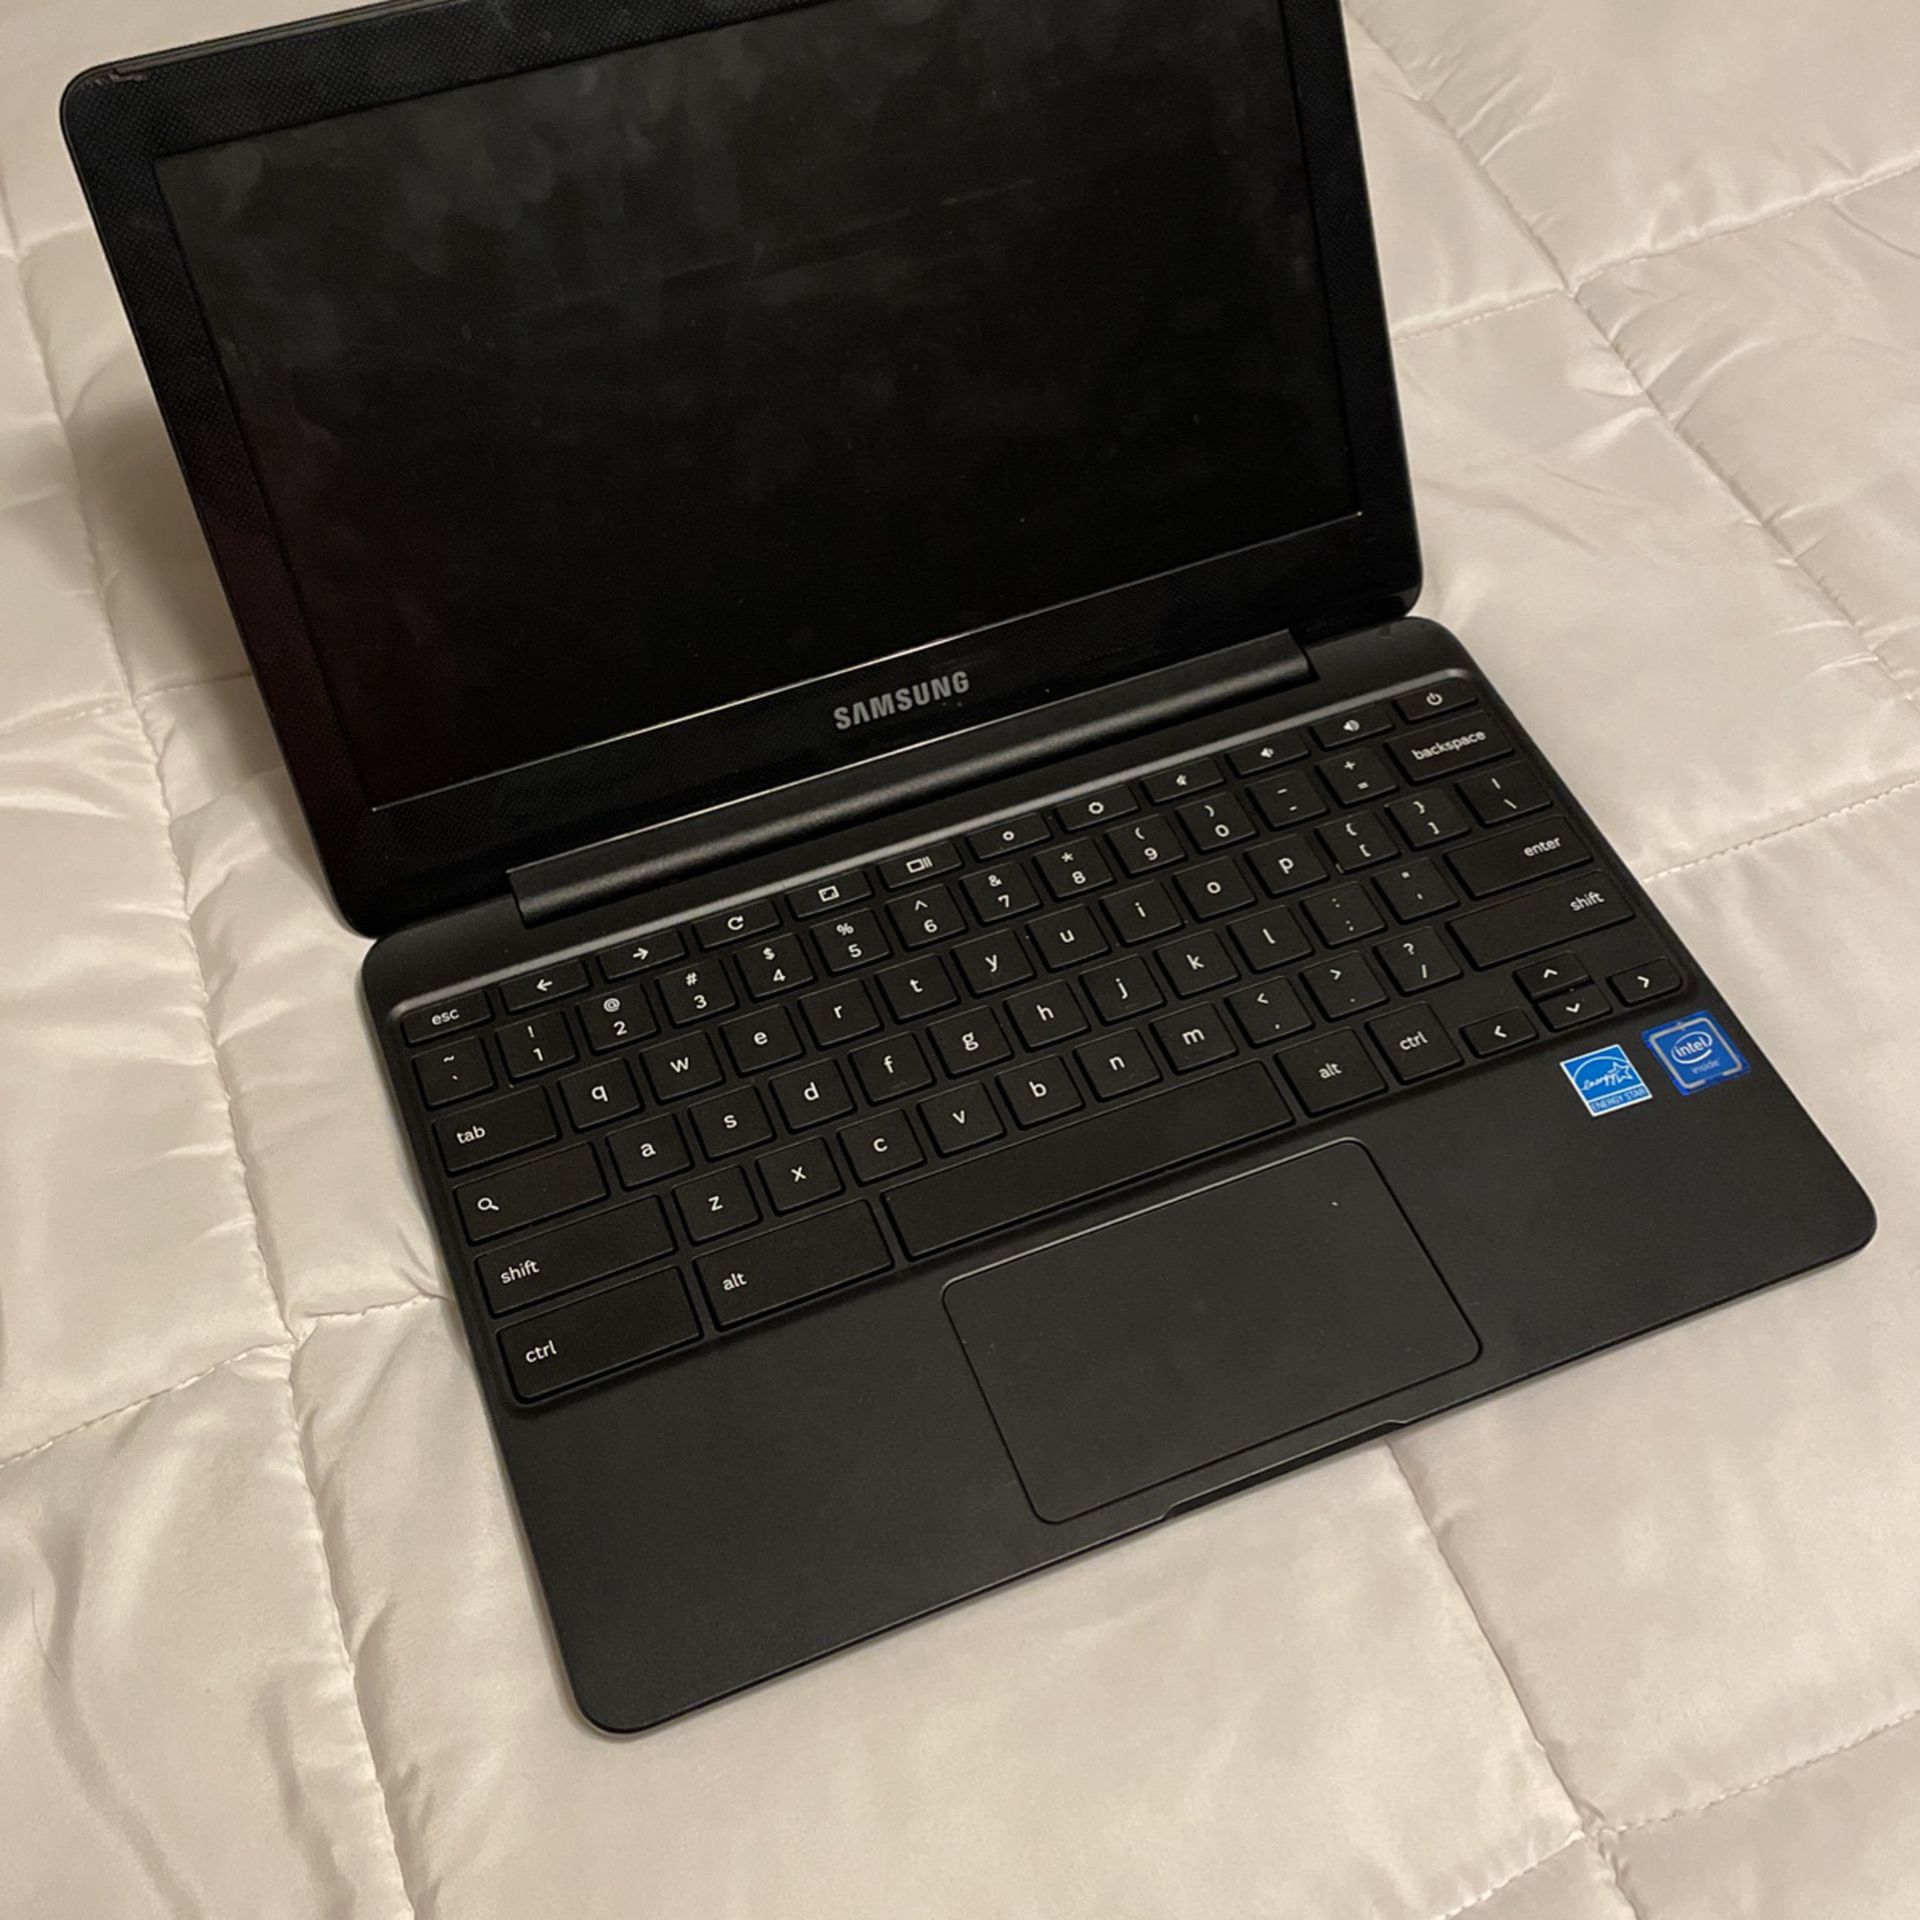 Samsung Chrome Notebook (Black)